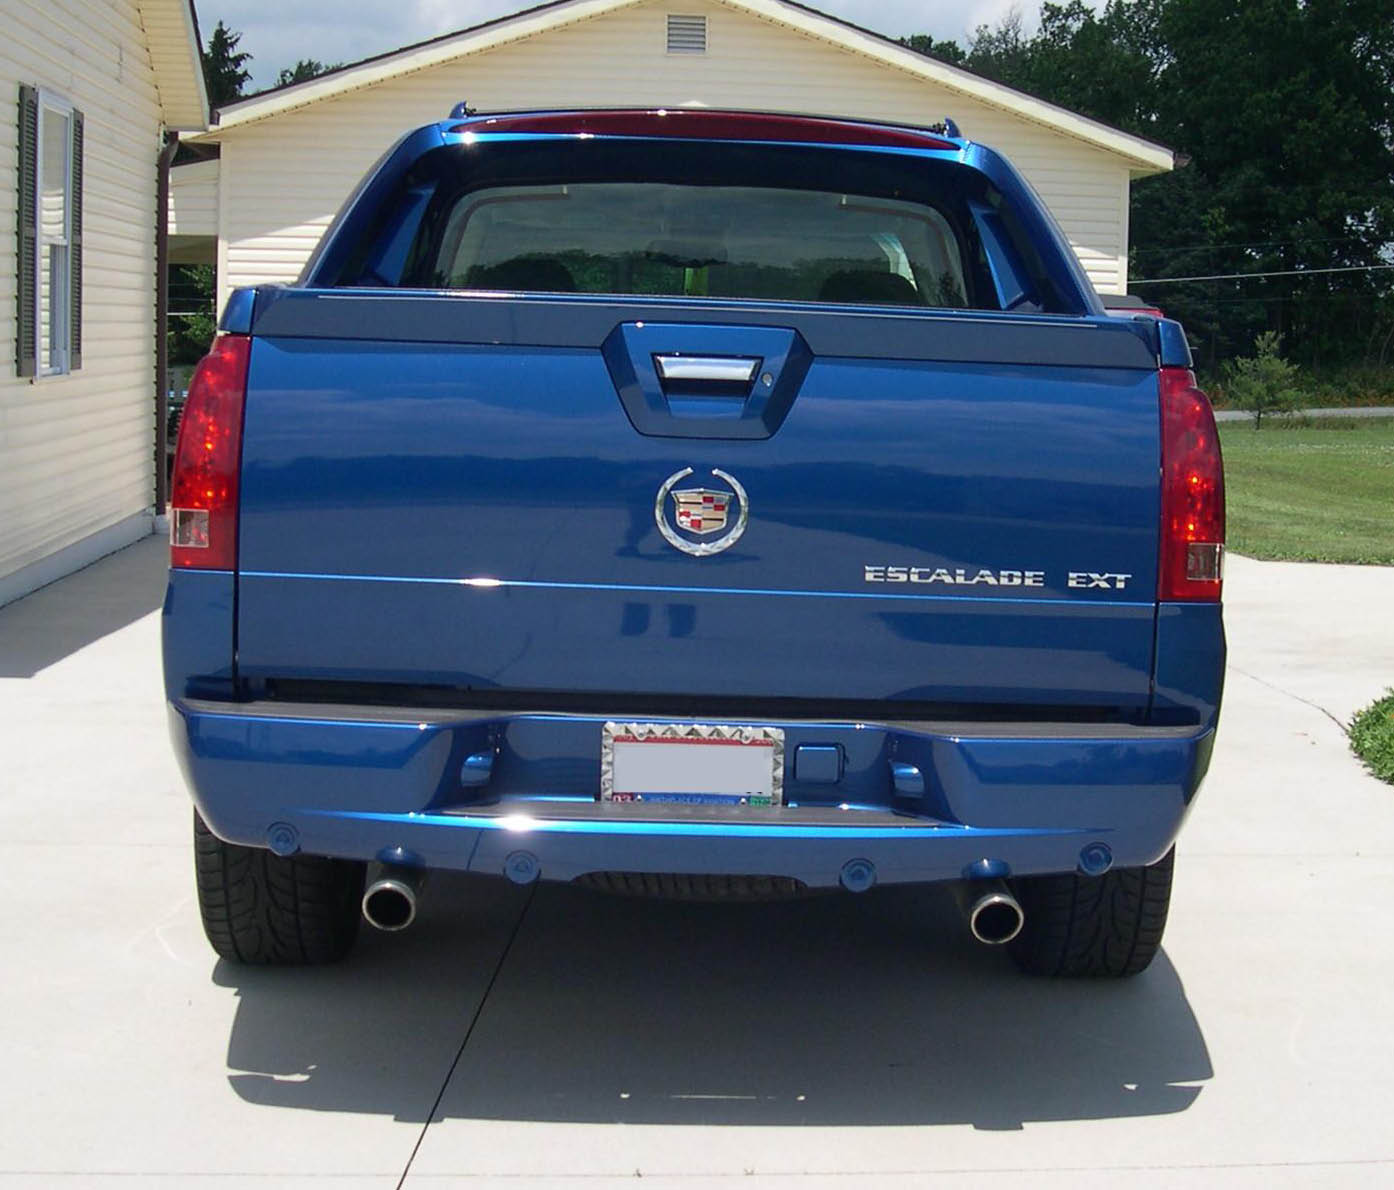 File:2003 Cadillac Escalade EXT rear.JPG - Wikimedia Commons